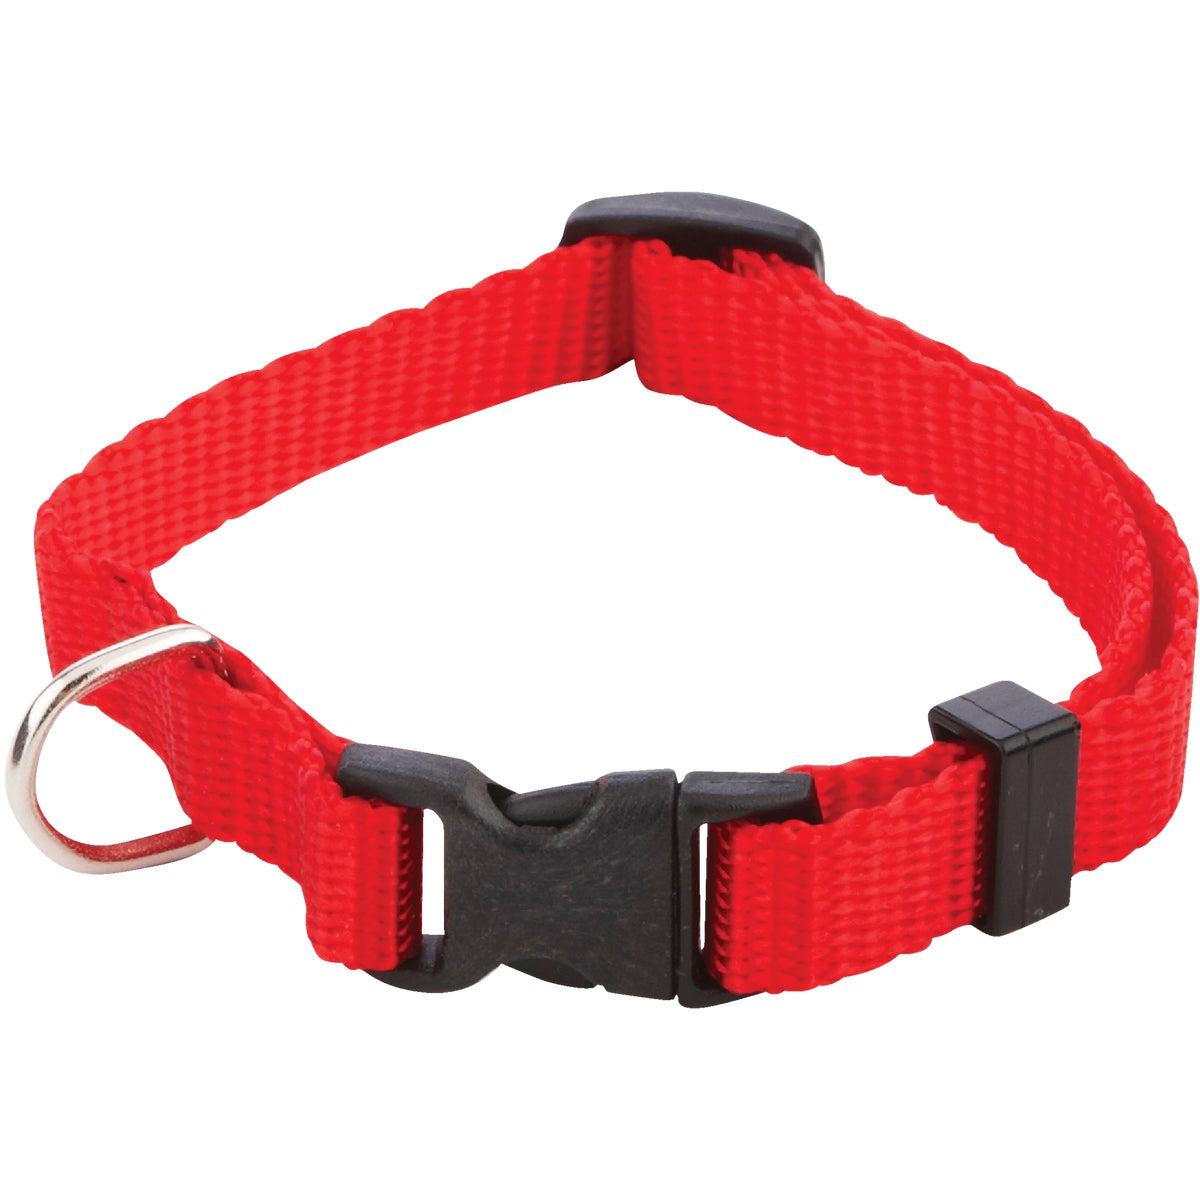 Item 805310, Adjustable, durable nylon pet collar.